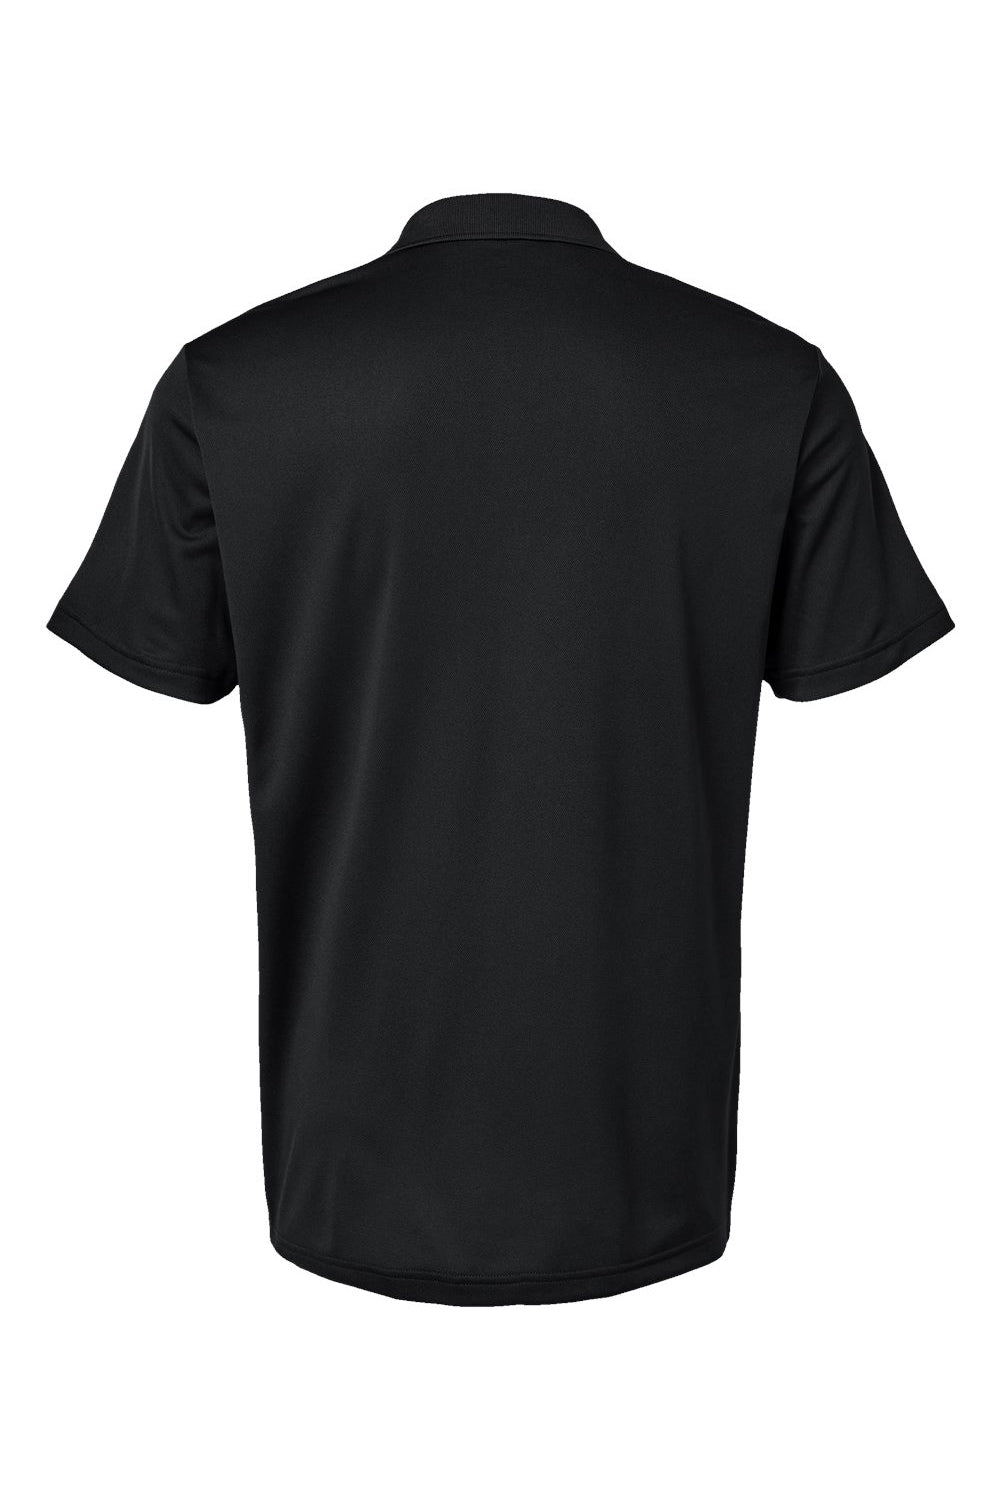 Adidas A430 Mens Basic Short Sleeve Polo Shirt Black Flat Back